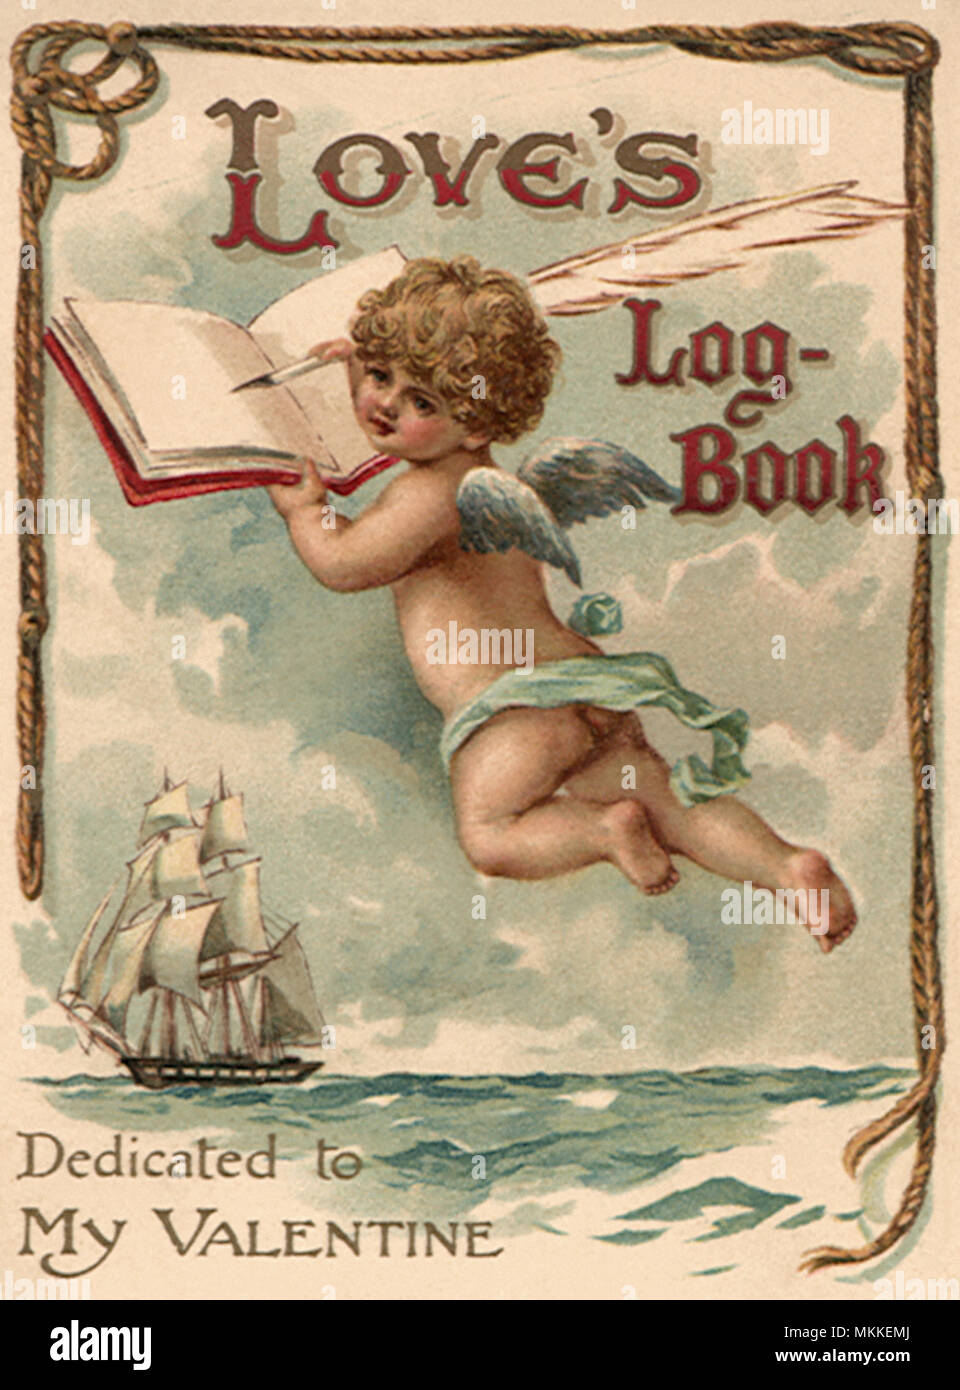 Love's Log-Book Banque D'Images